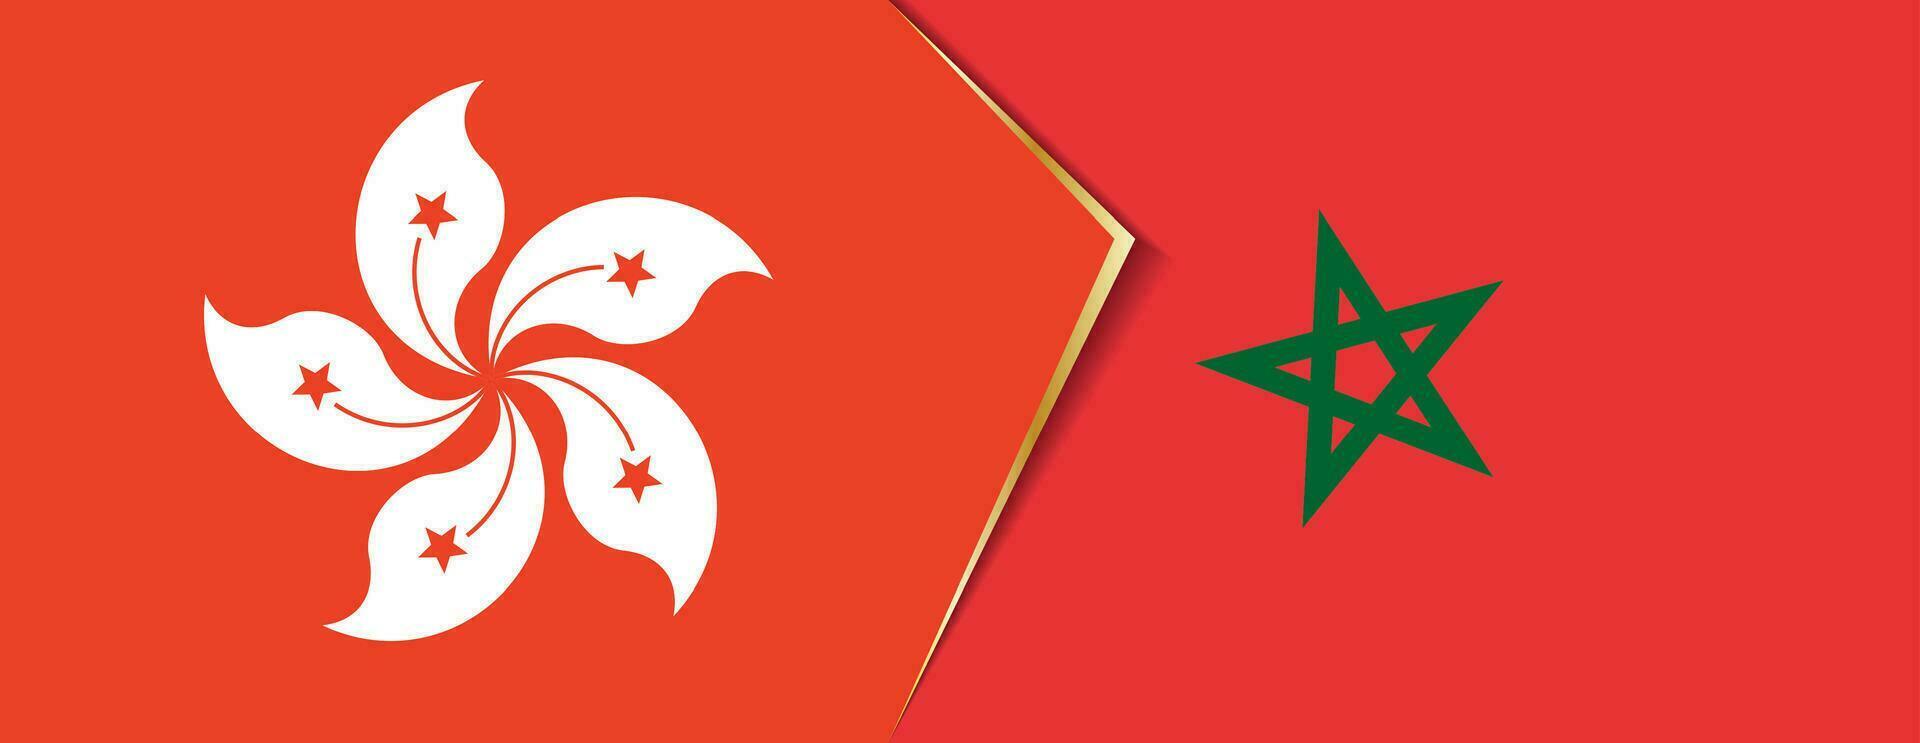 hong kong e Marocco bandiere, Due vettore bandiere.